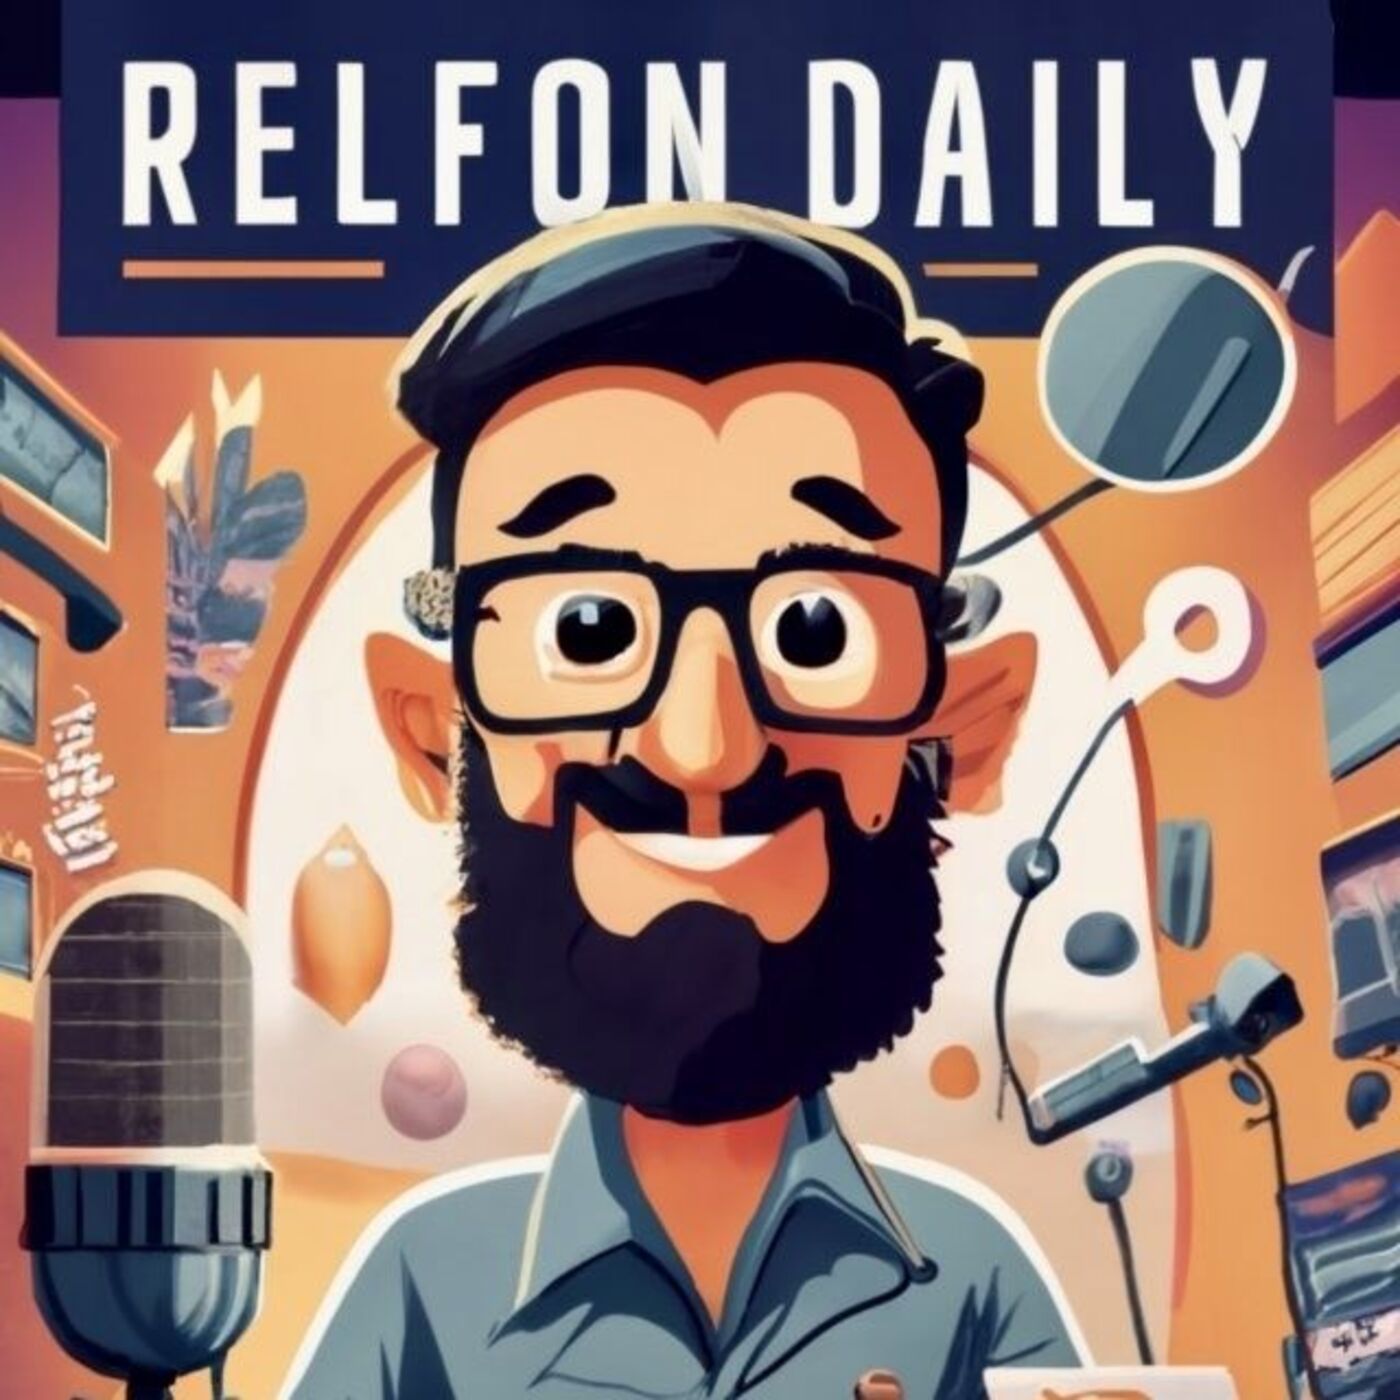 Relfon daily podcast